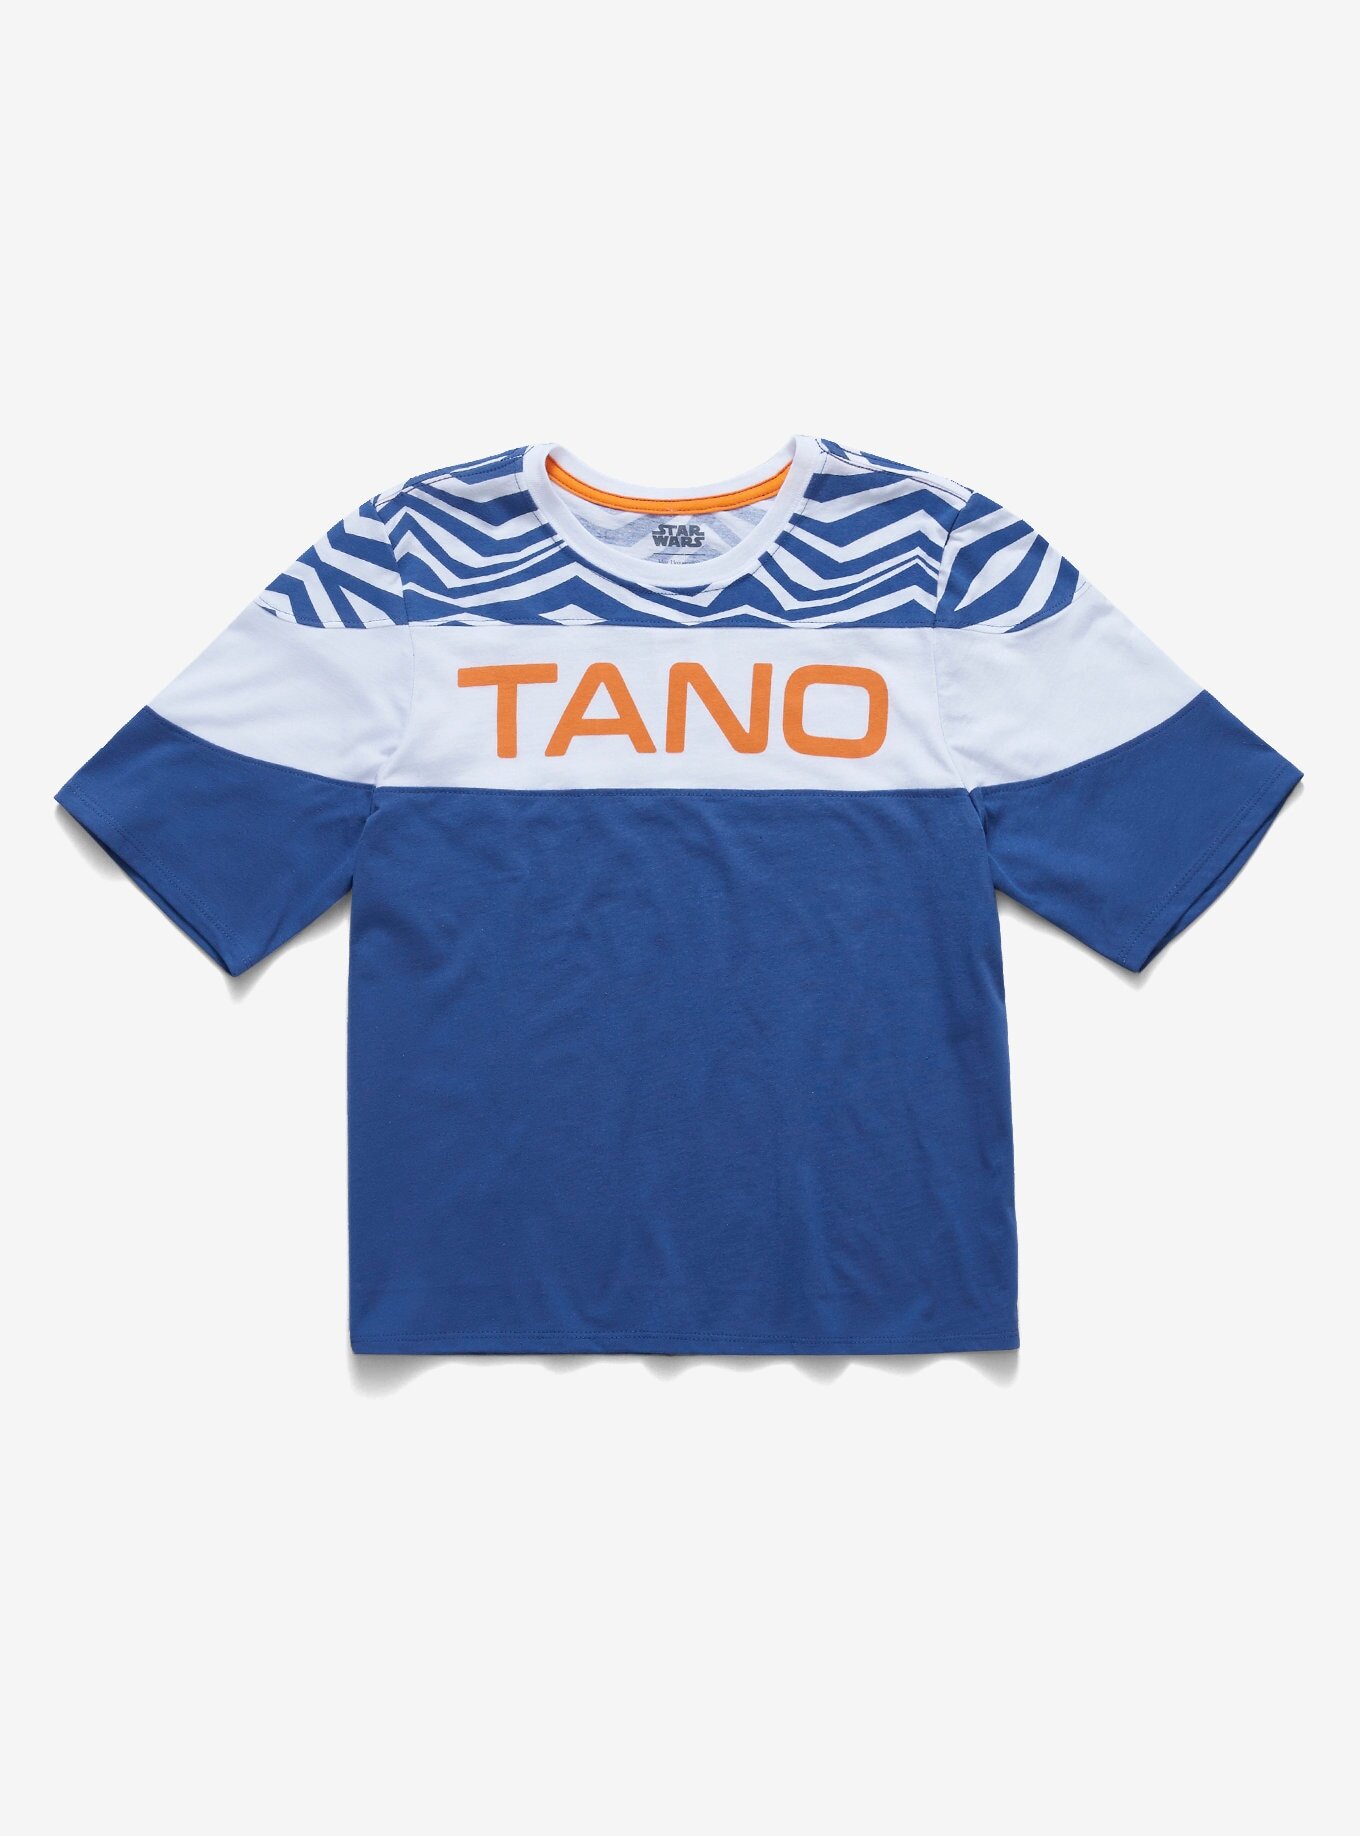 Ahsoka Tano Colorblock T-shirt